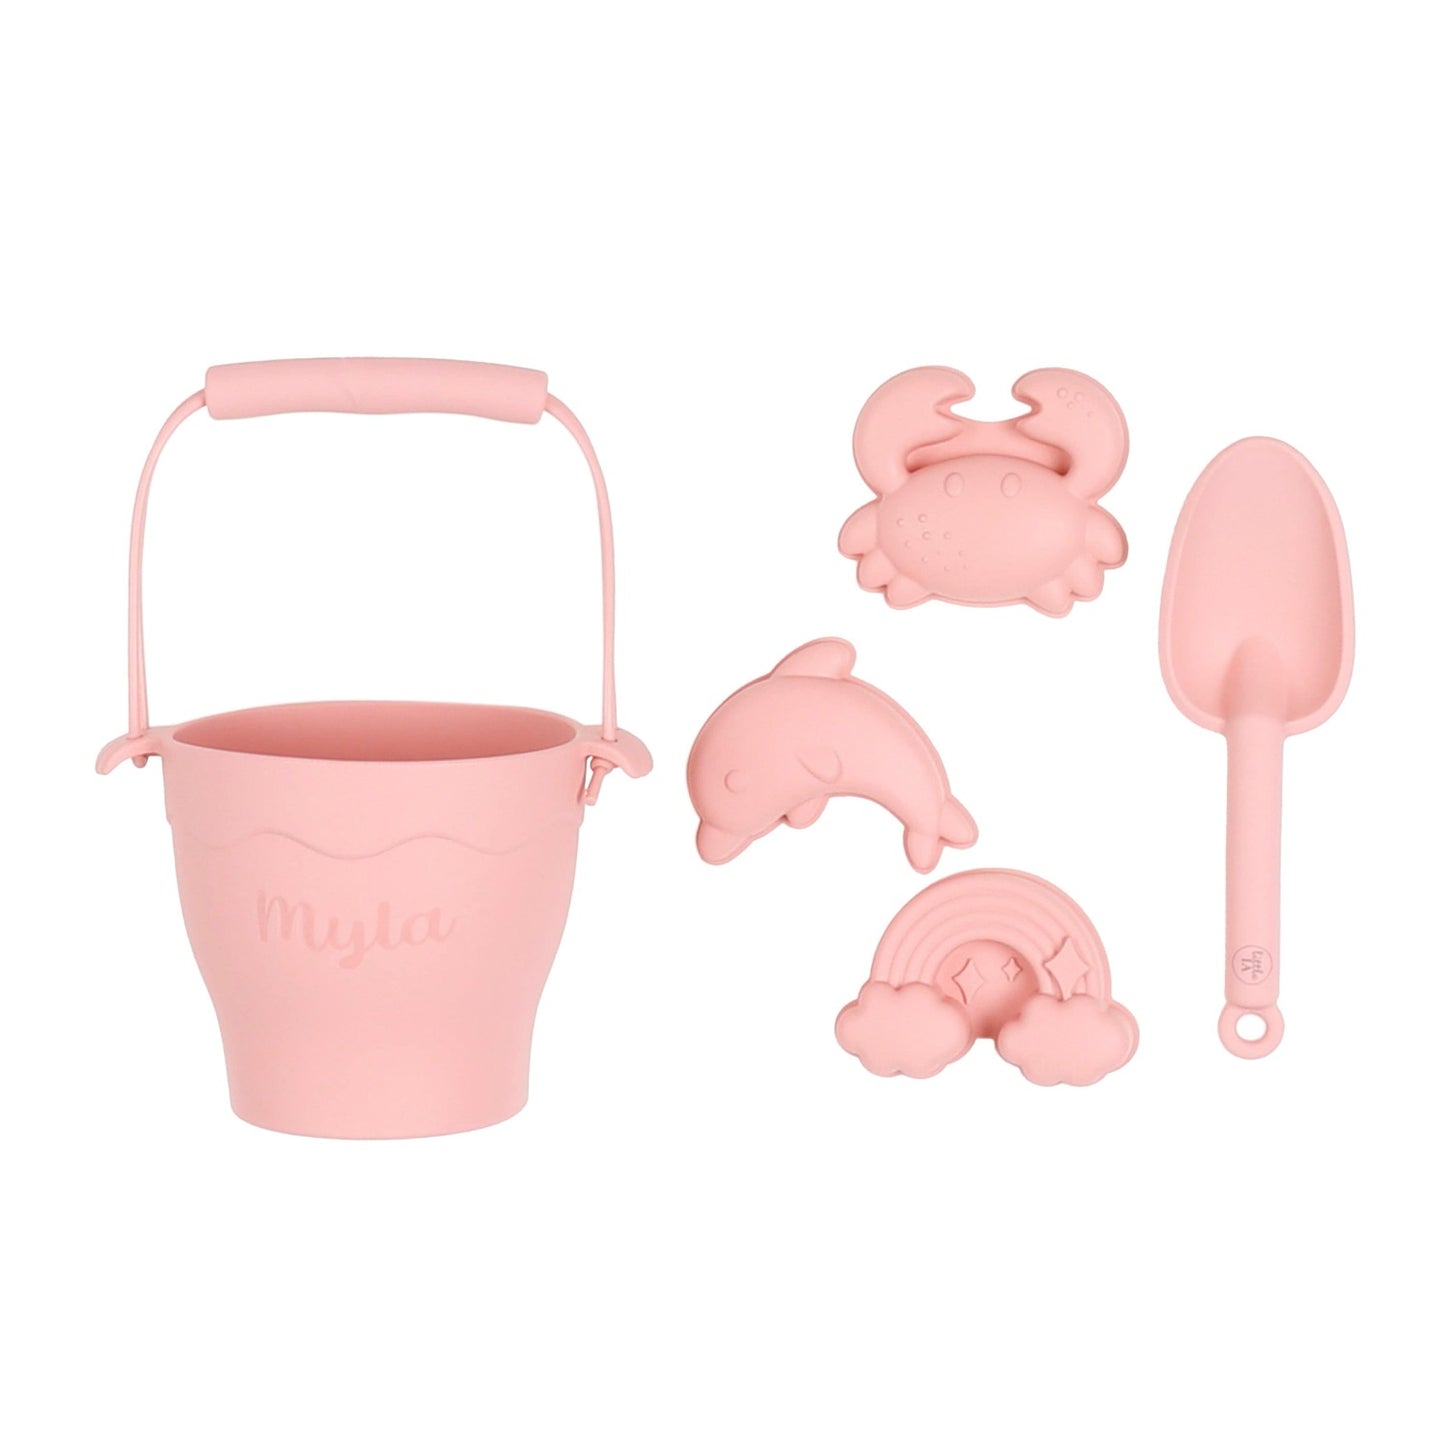 5-Piece Silicone Beach Toy Set - Pink